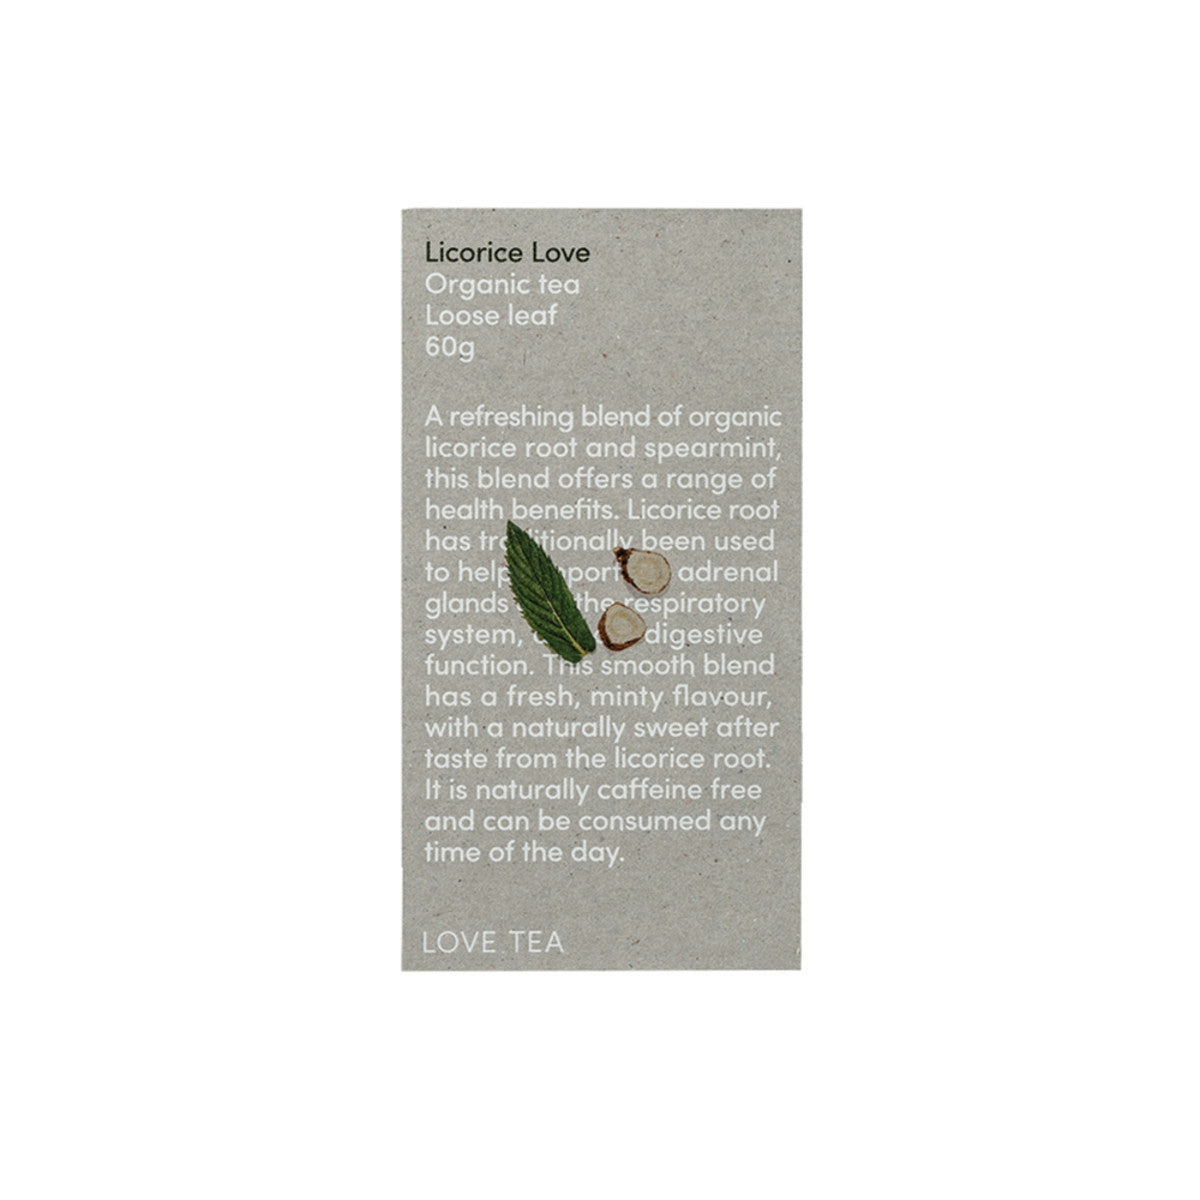 image of Love Tea Organic Licorice Love Tea Loose Leaf 60g on white background 